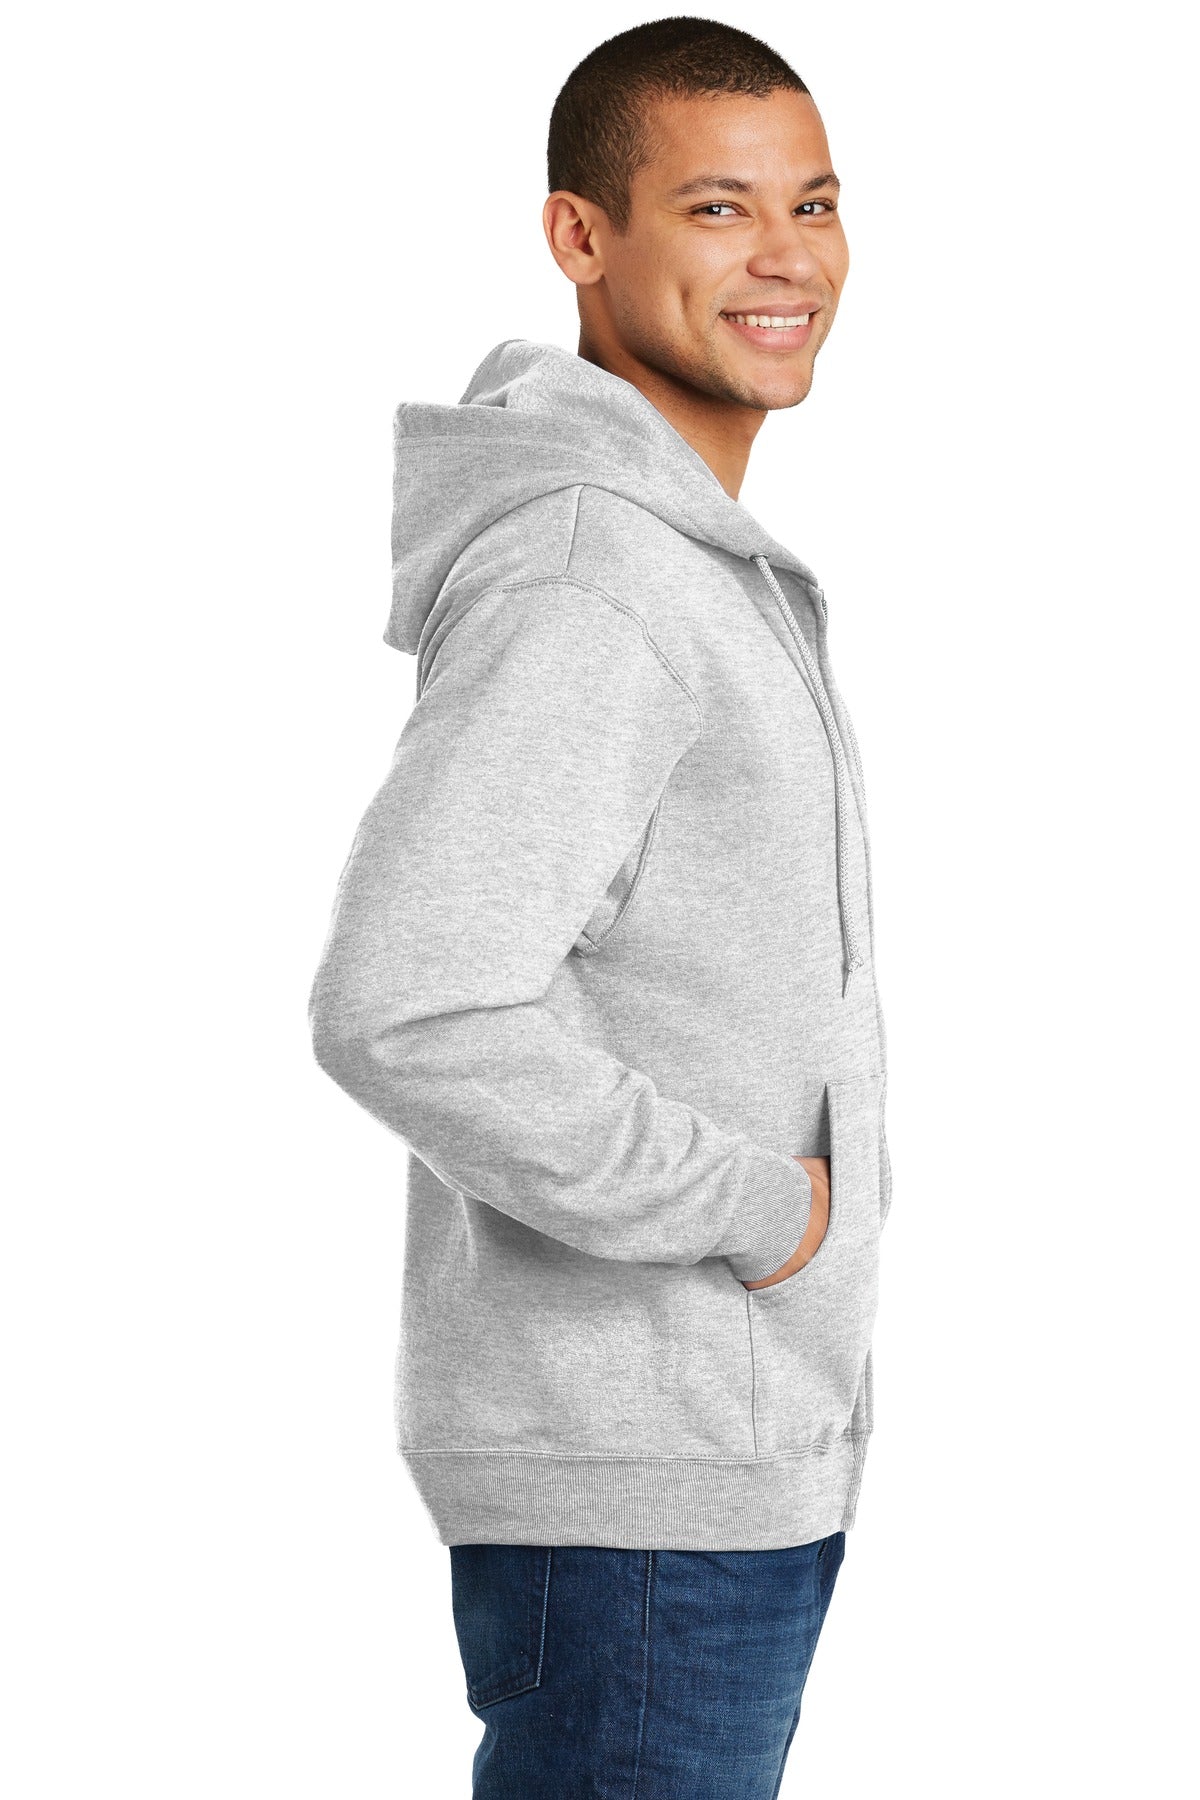 JERZEES® - NuBlend® Full-Zip Hooded Sweatshirt. 993M - DFW Impression